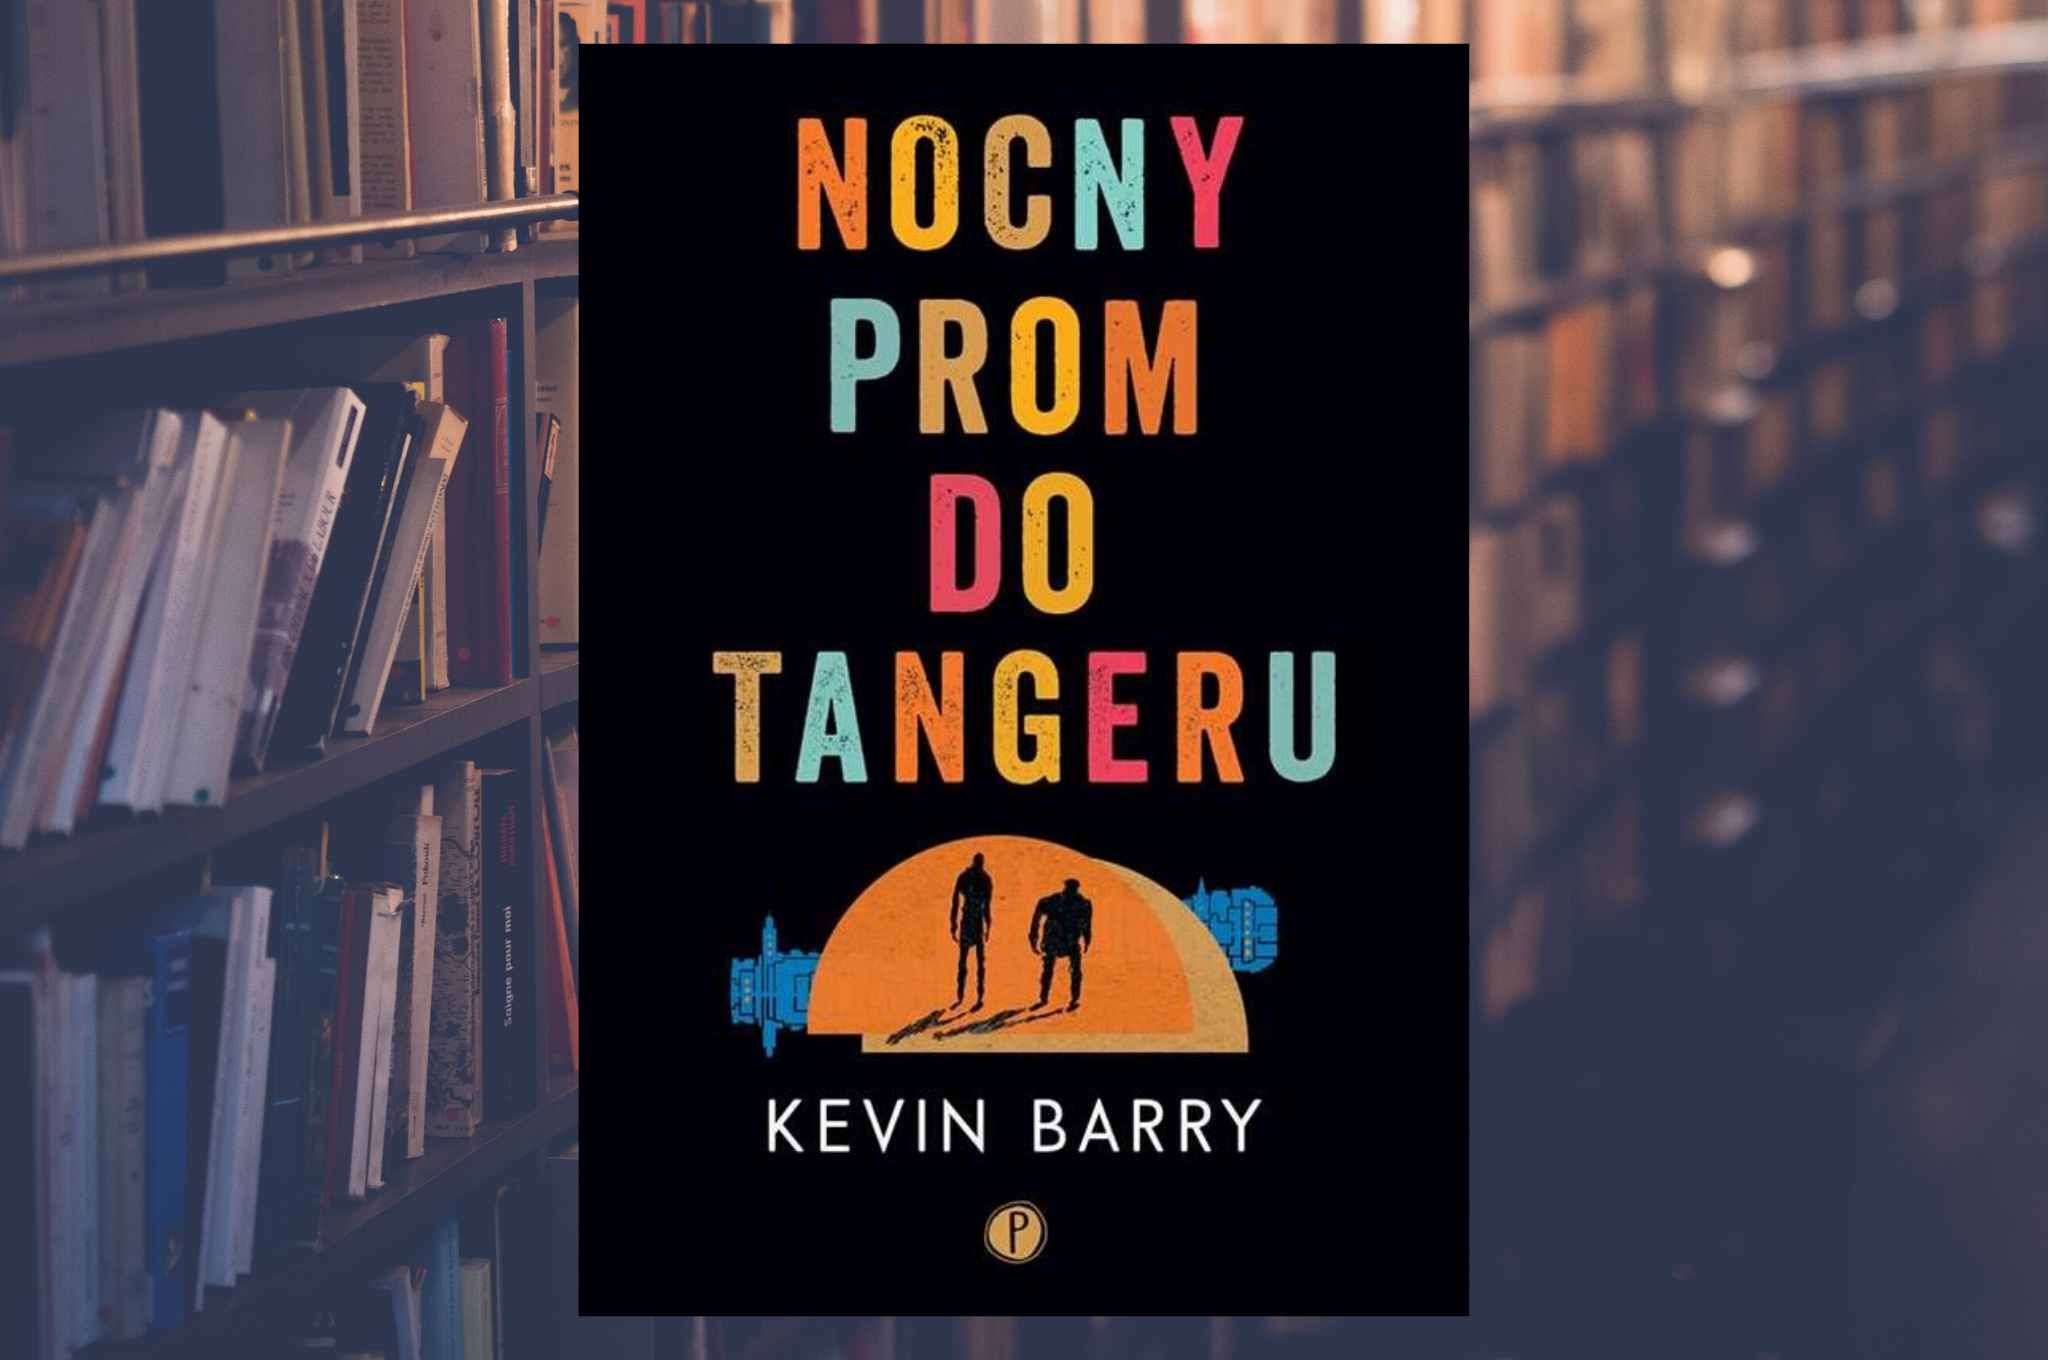 KEVIN BARRY "NOCNY PROM DO TANGERU"